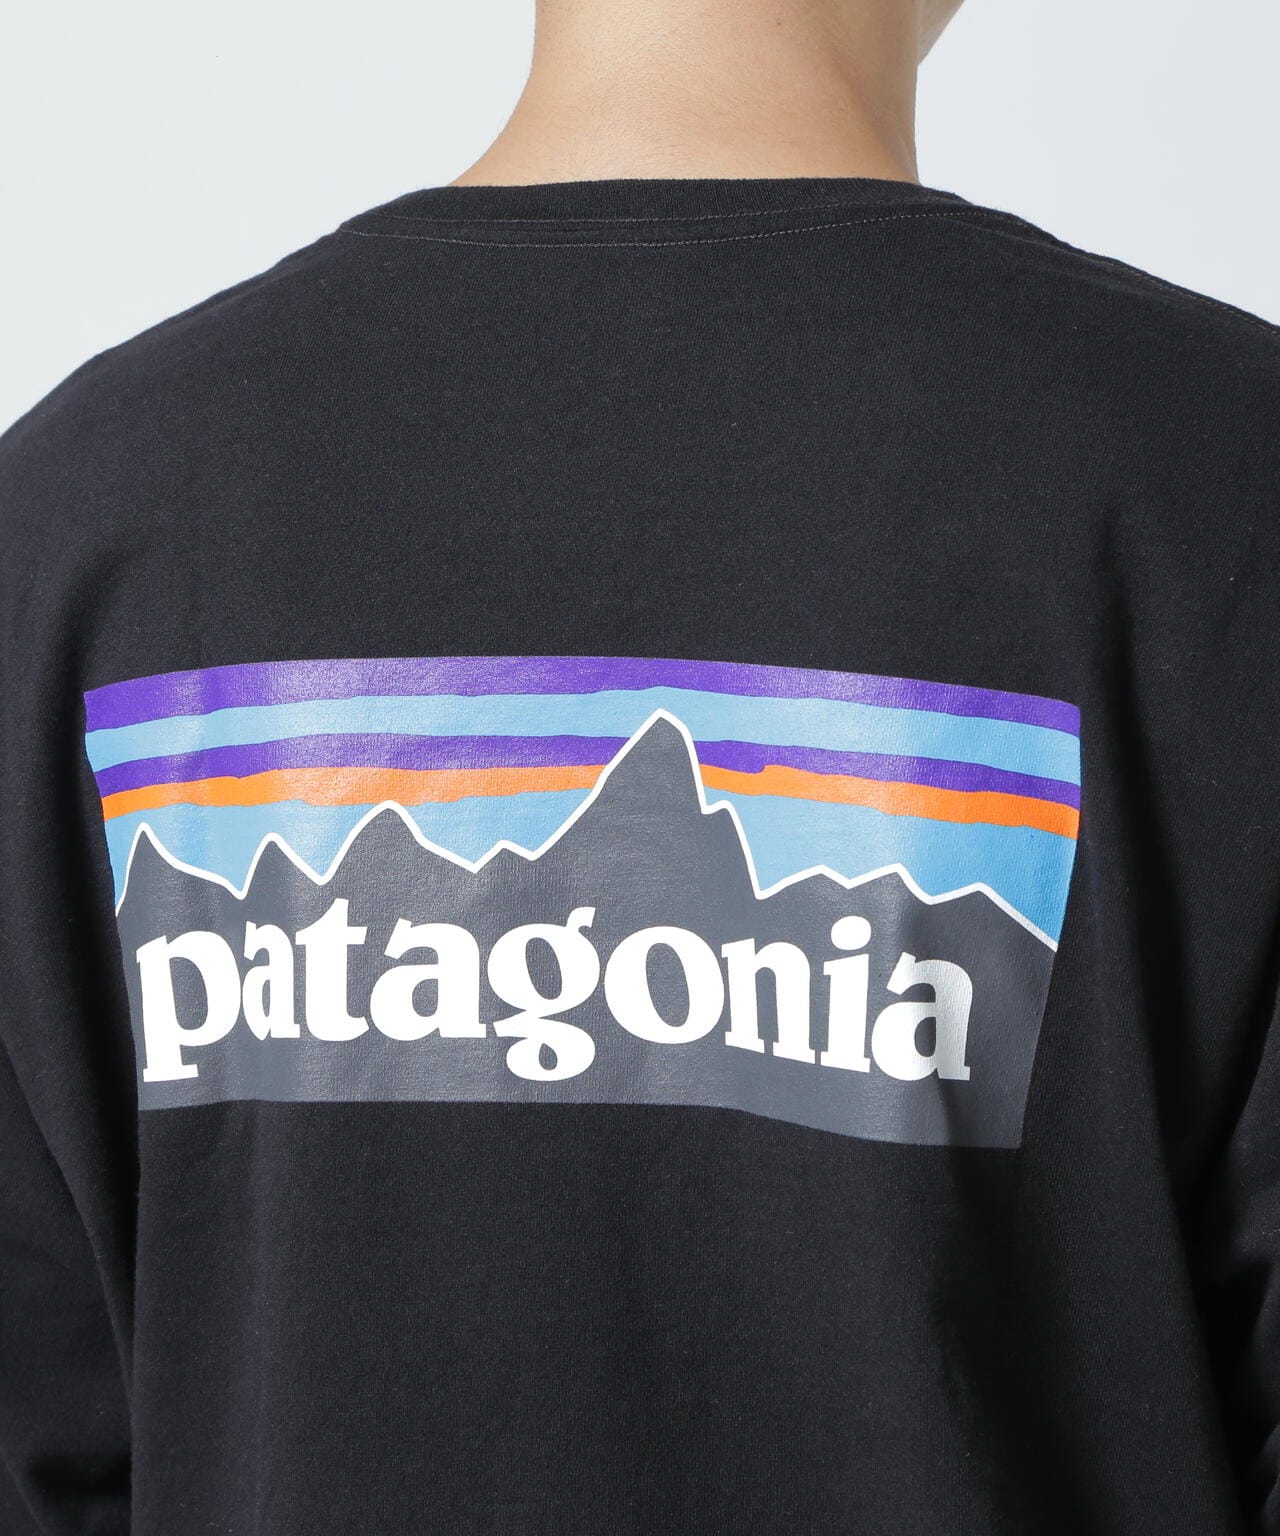 Patagonia/パタゴニア メンズ・ロングスリーブ・P-6ロゴ・レスポンシビ 